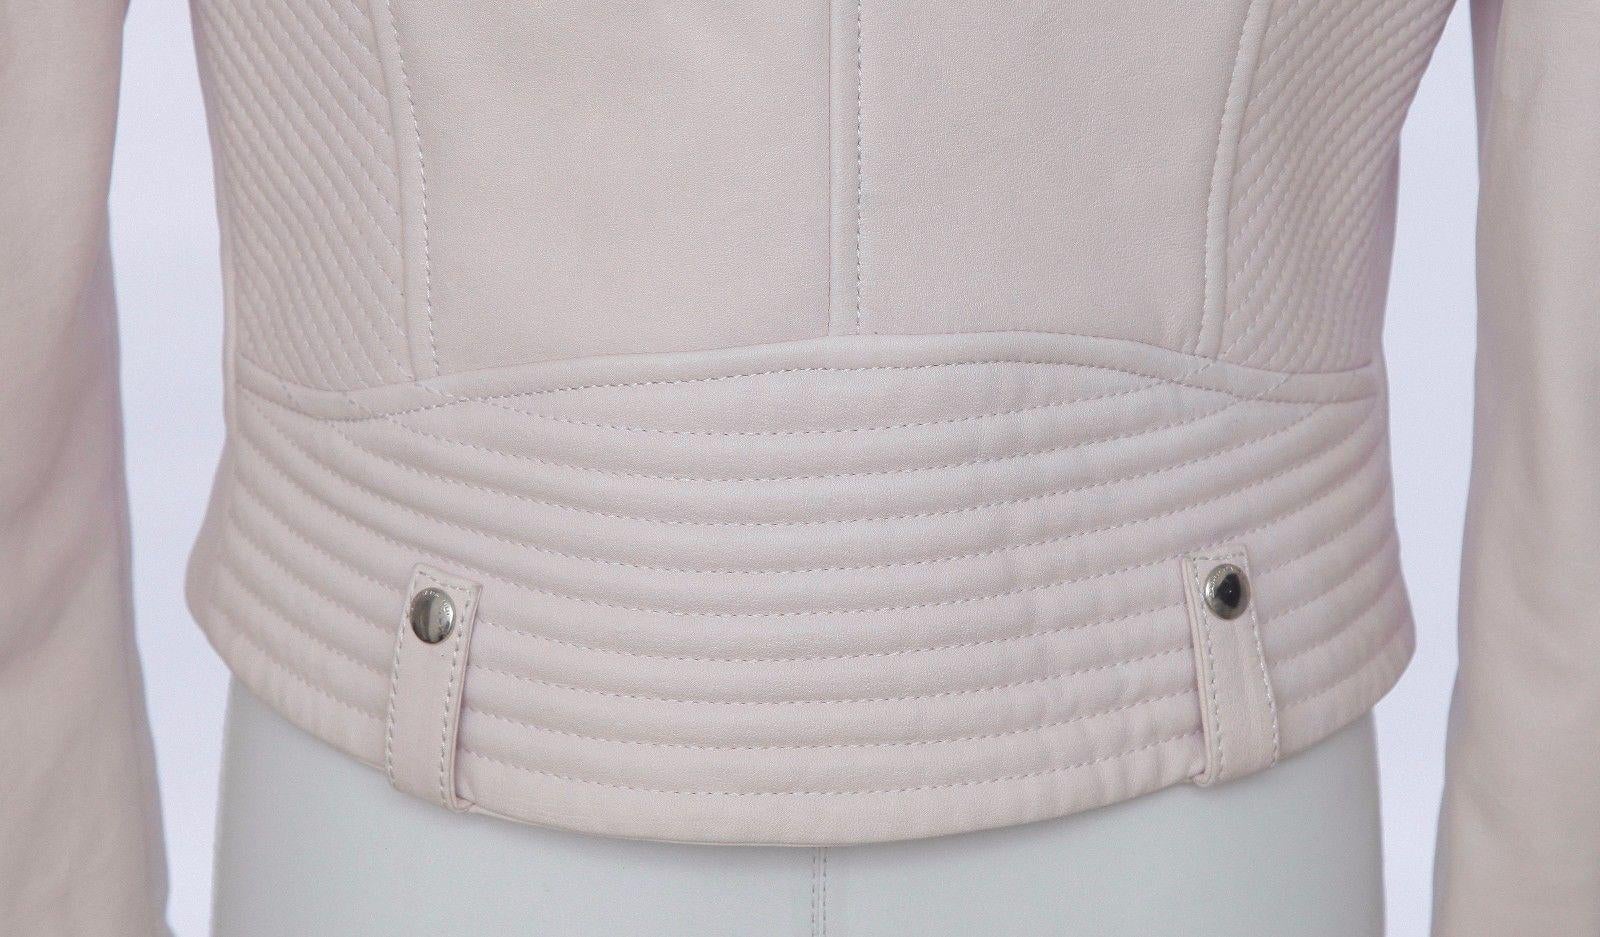 Women's BARBARA BUI Jacket Leather Moto Coat Powder Pink Long Sleeve Zipper Sz 42 $2350